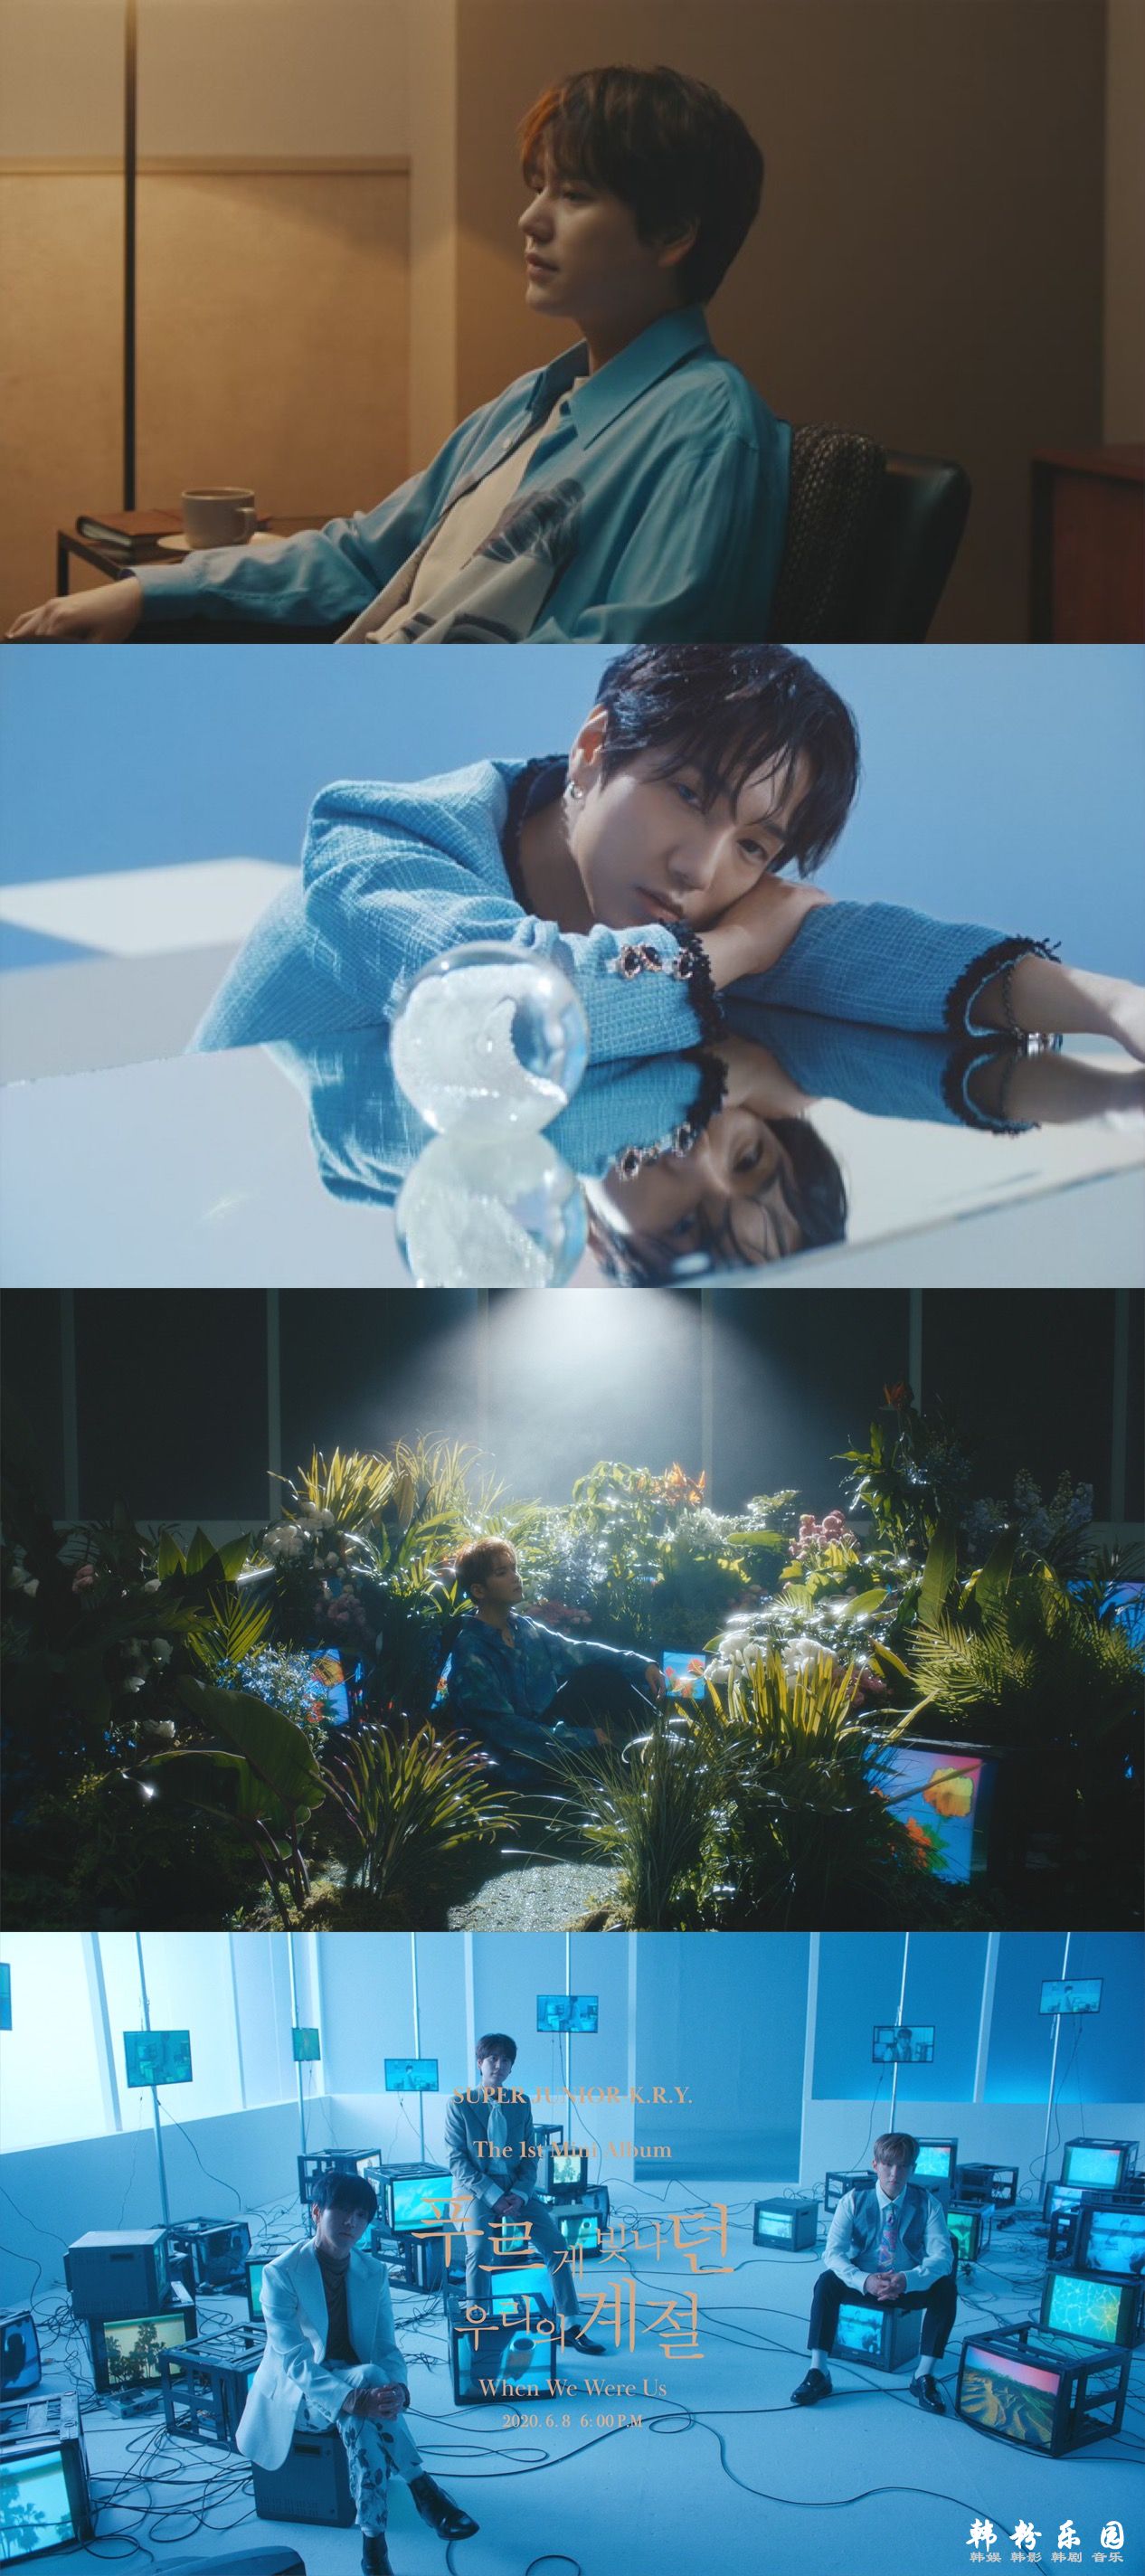 SJ-K.R.Y.迷你1辑主打曲《我们的青涩季节》MV预告片公开